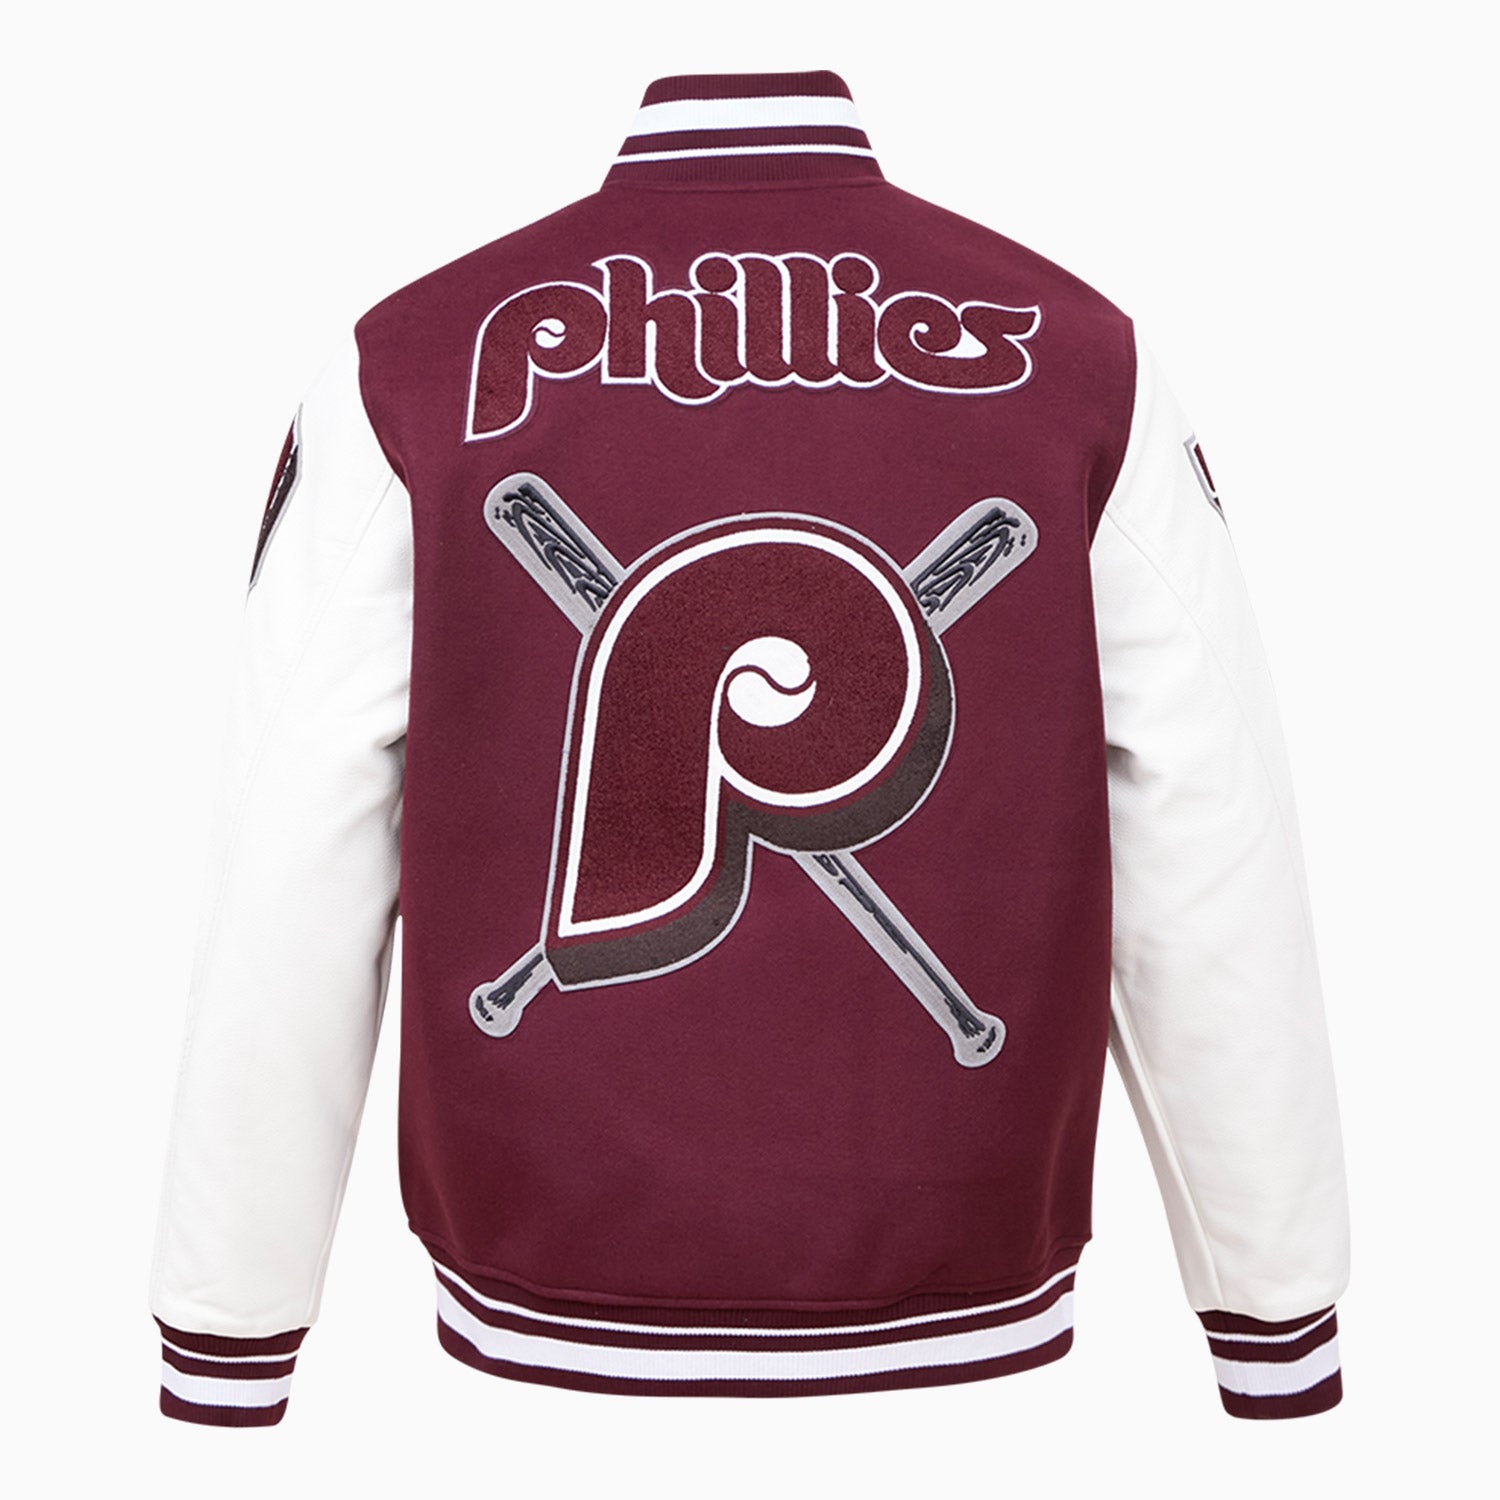 ro-standard-mens-philadelphia-phillies-varsity-jacket-lph633424-wiw